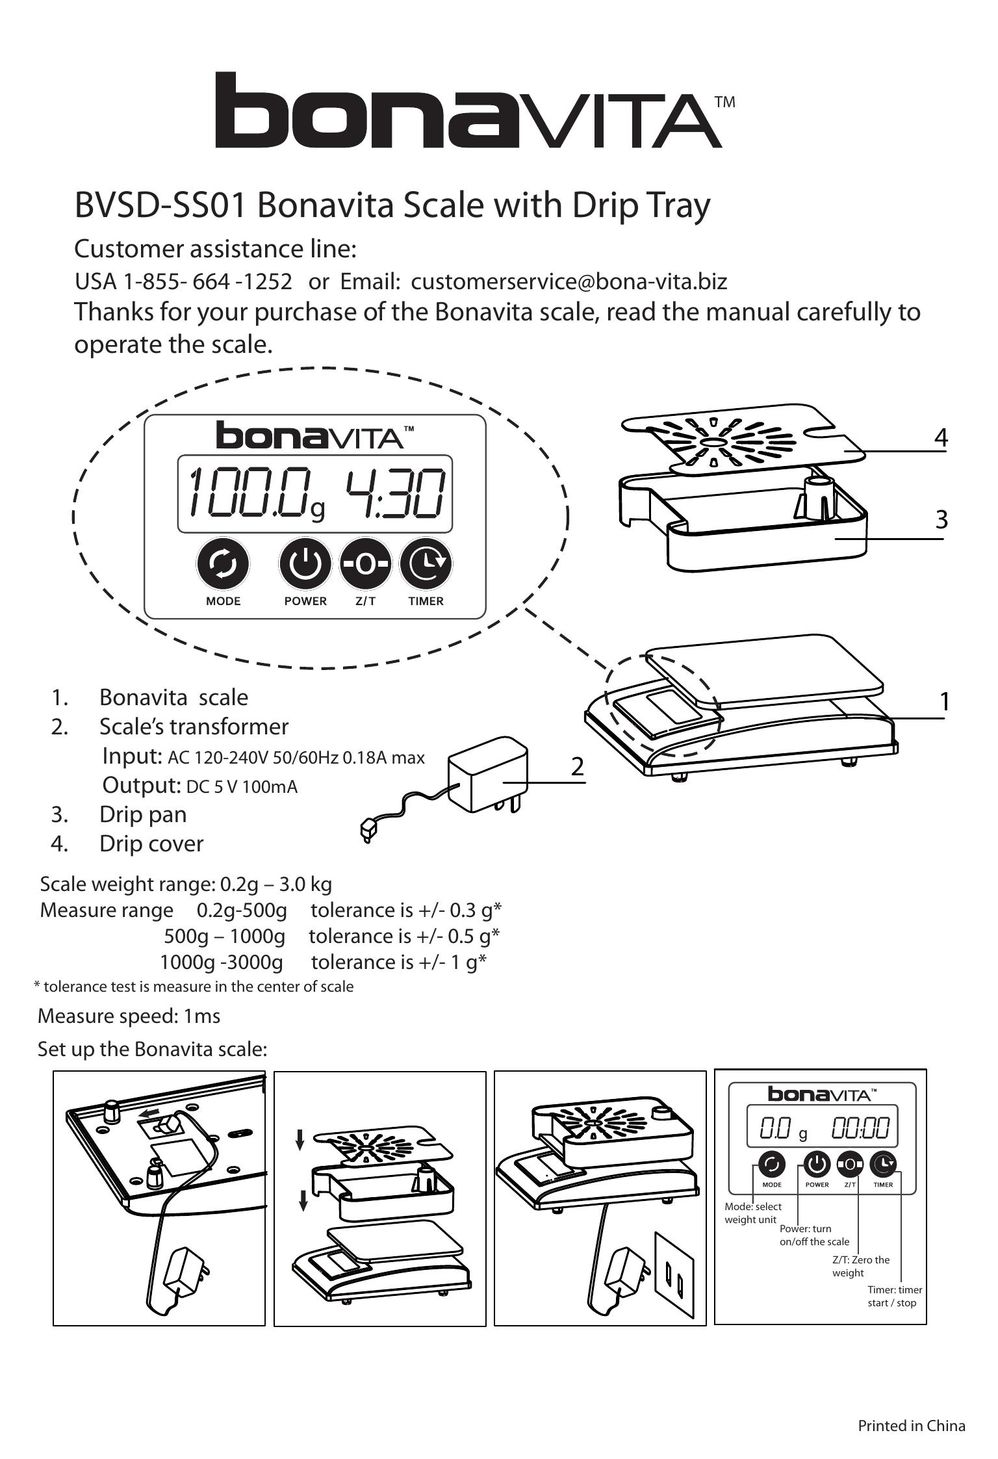 Bonavita BVSD-SS01 Coffeemaker User Manual